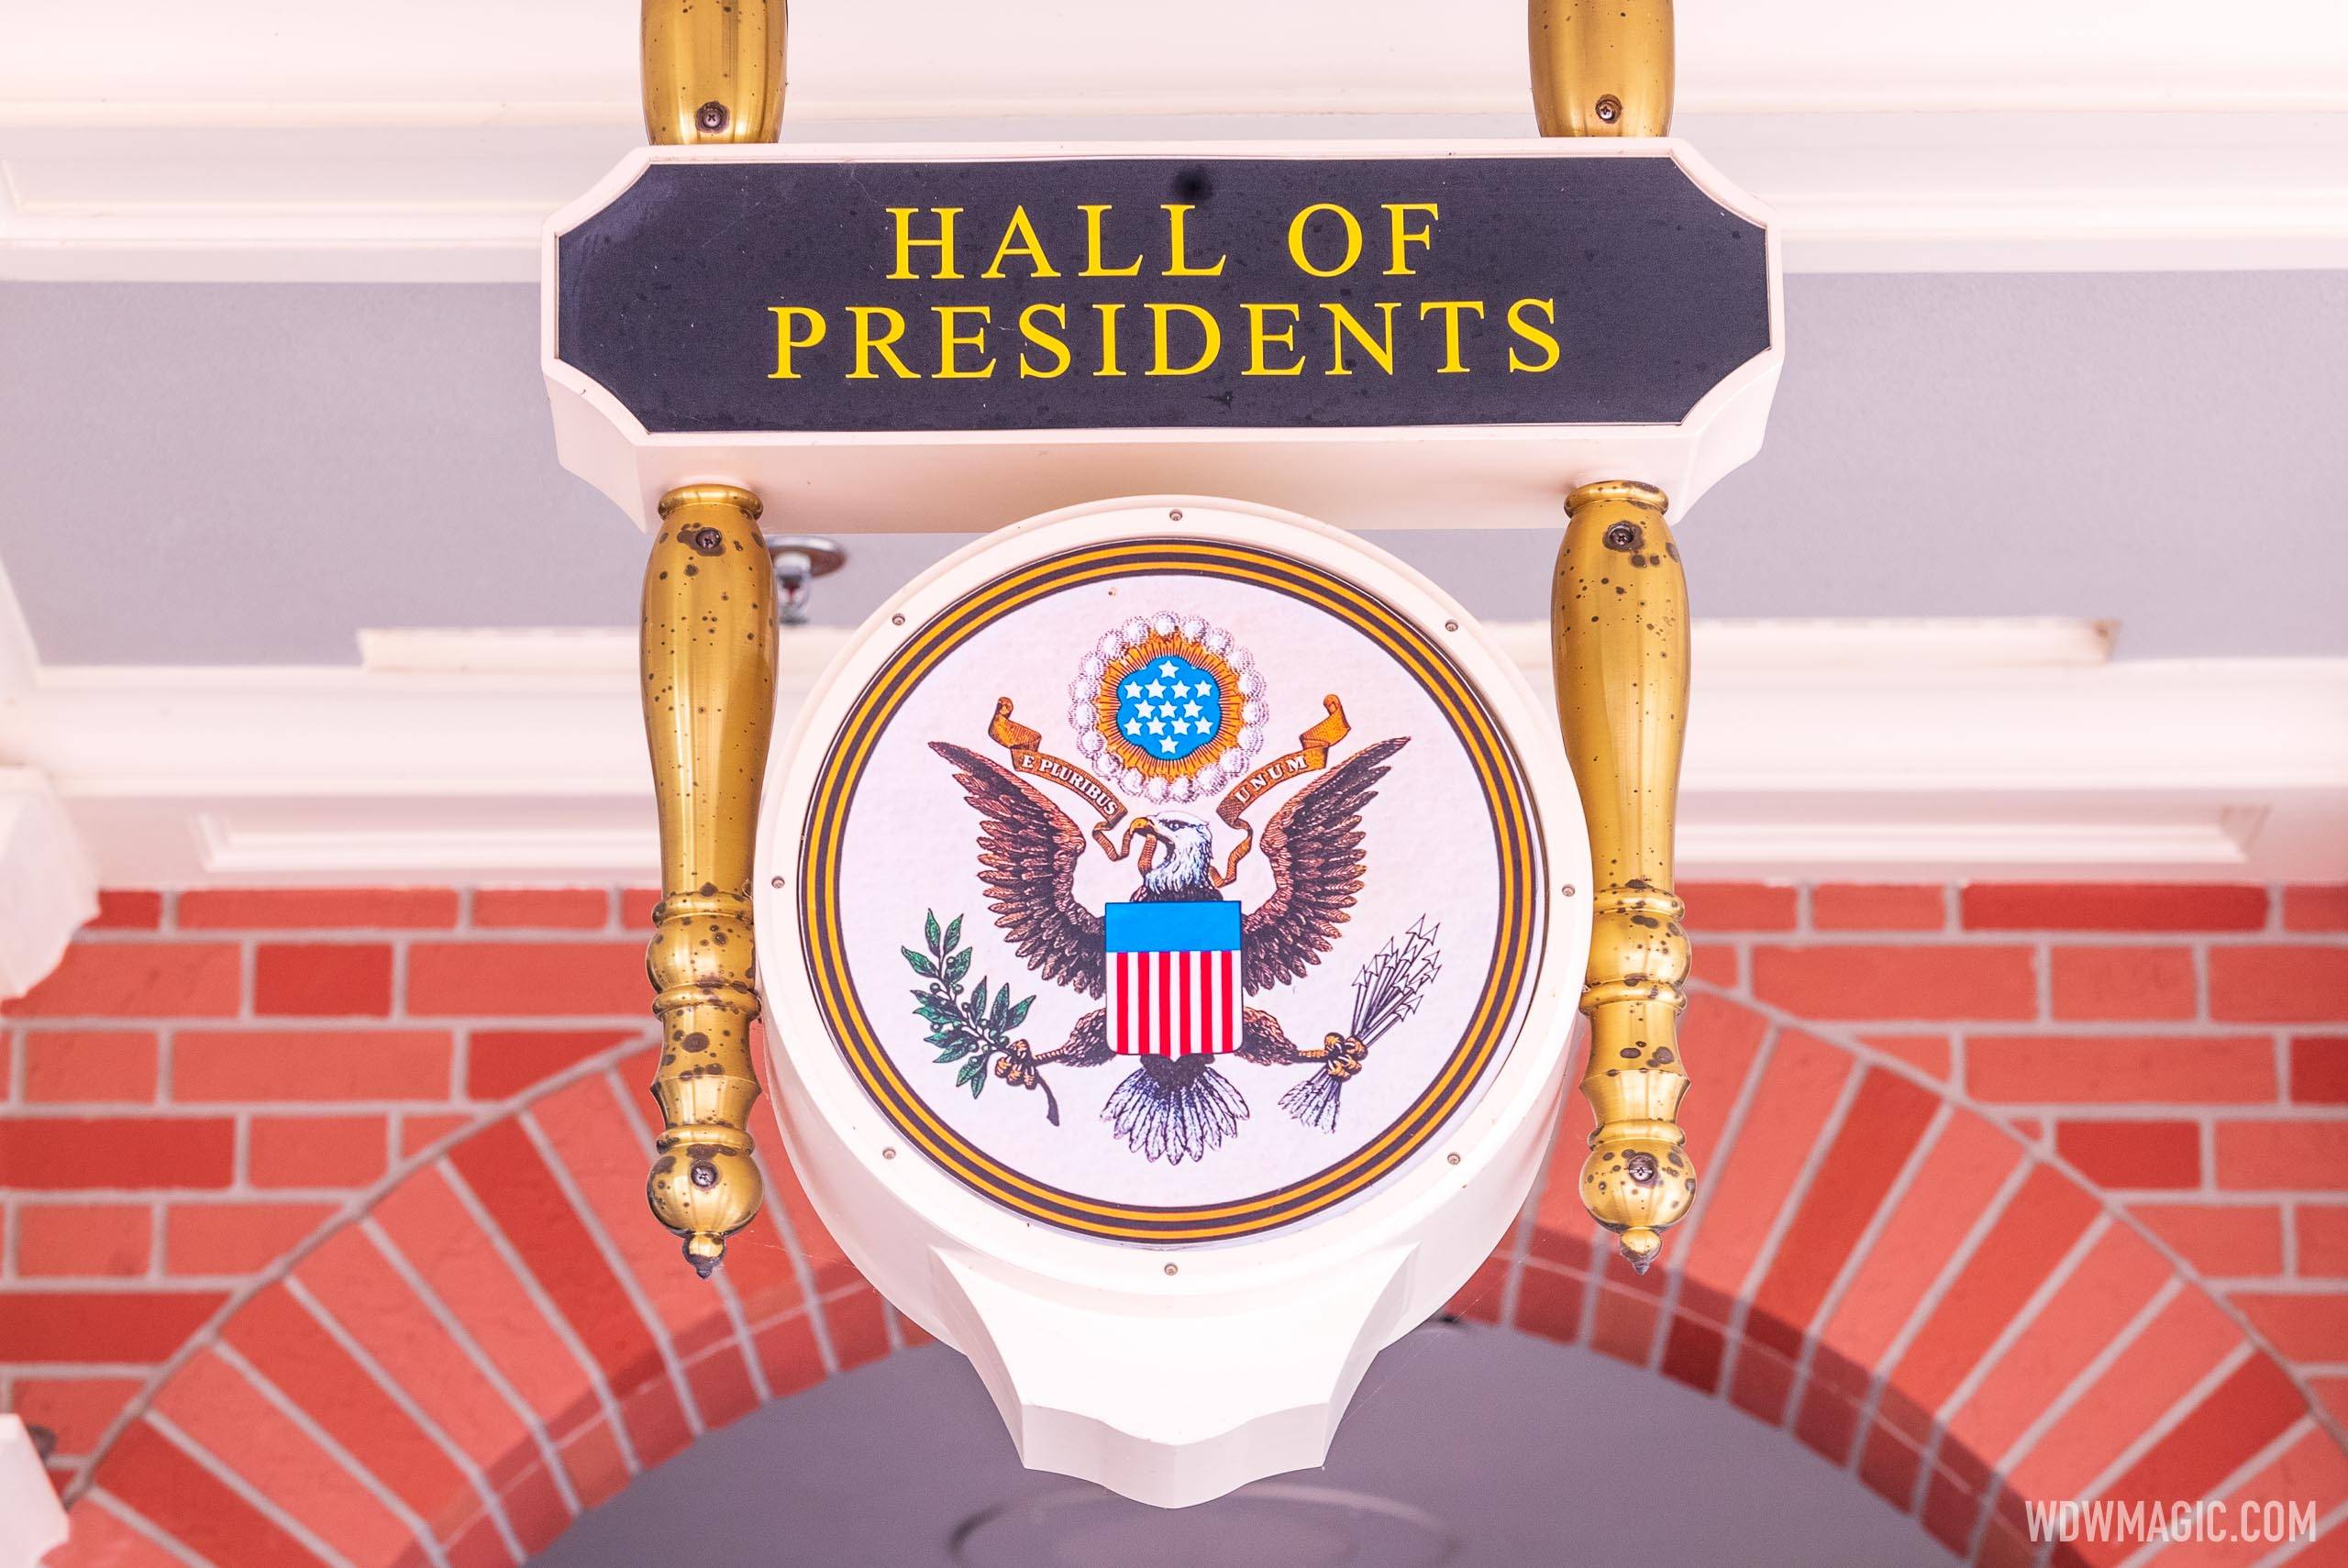 Joe Biden in the Hall of Presidents